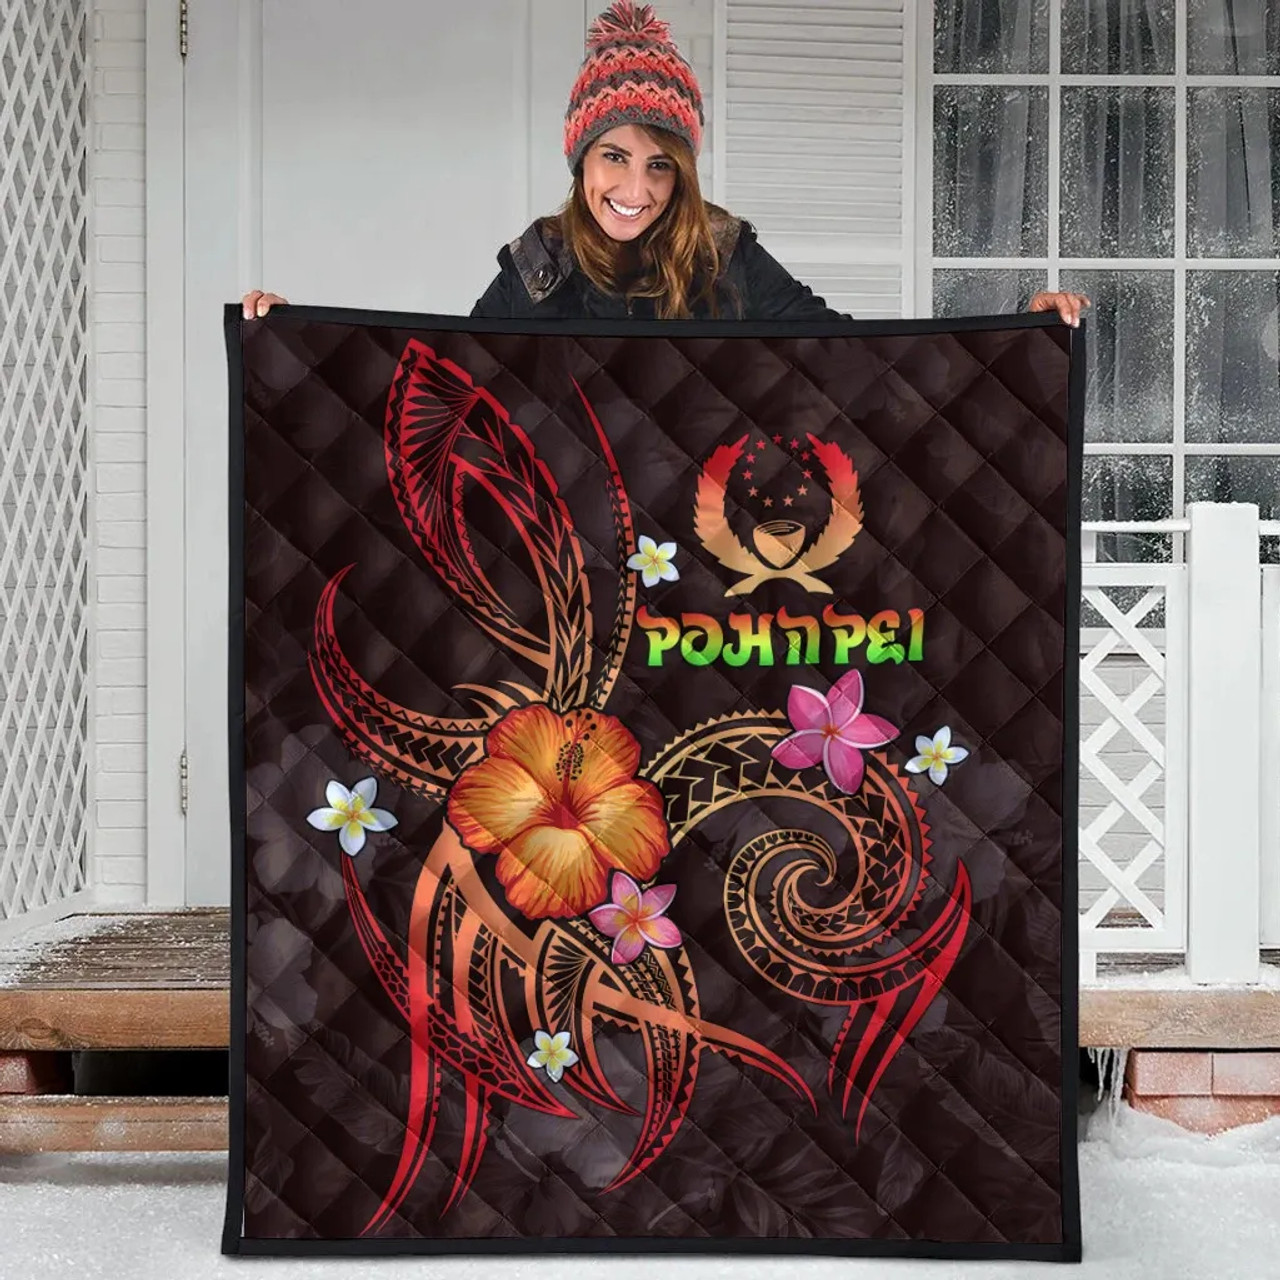 Pohnpei Polynesian Premium Quilt - Legend of Pohnpei (Red) 9